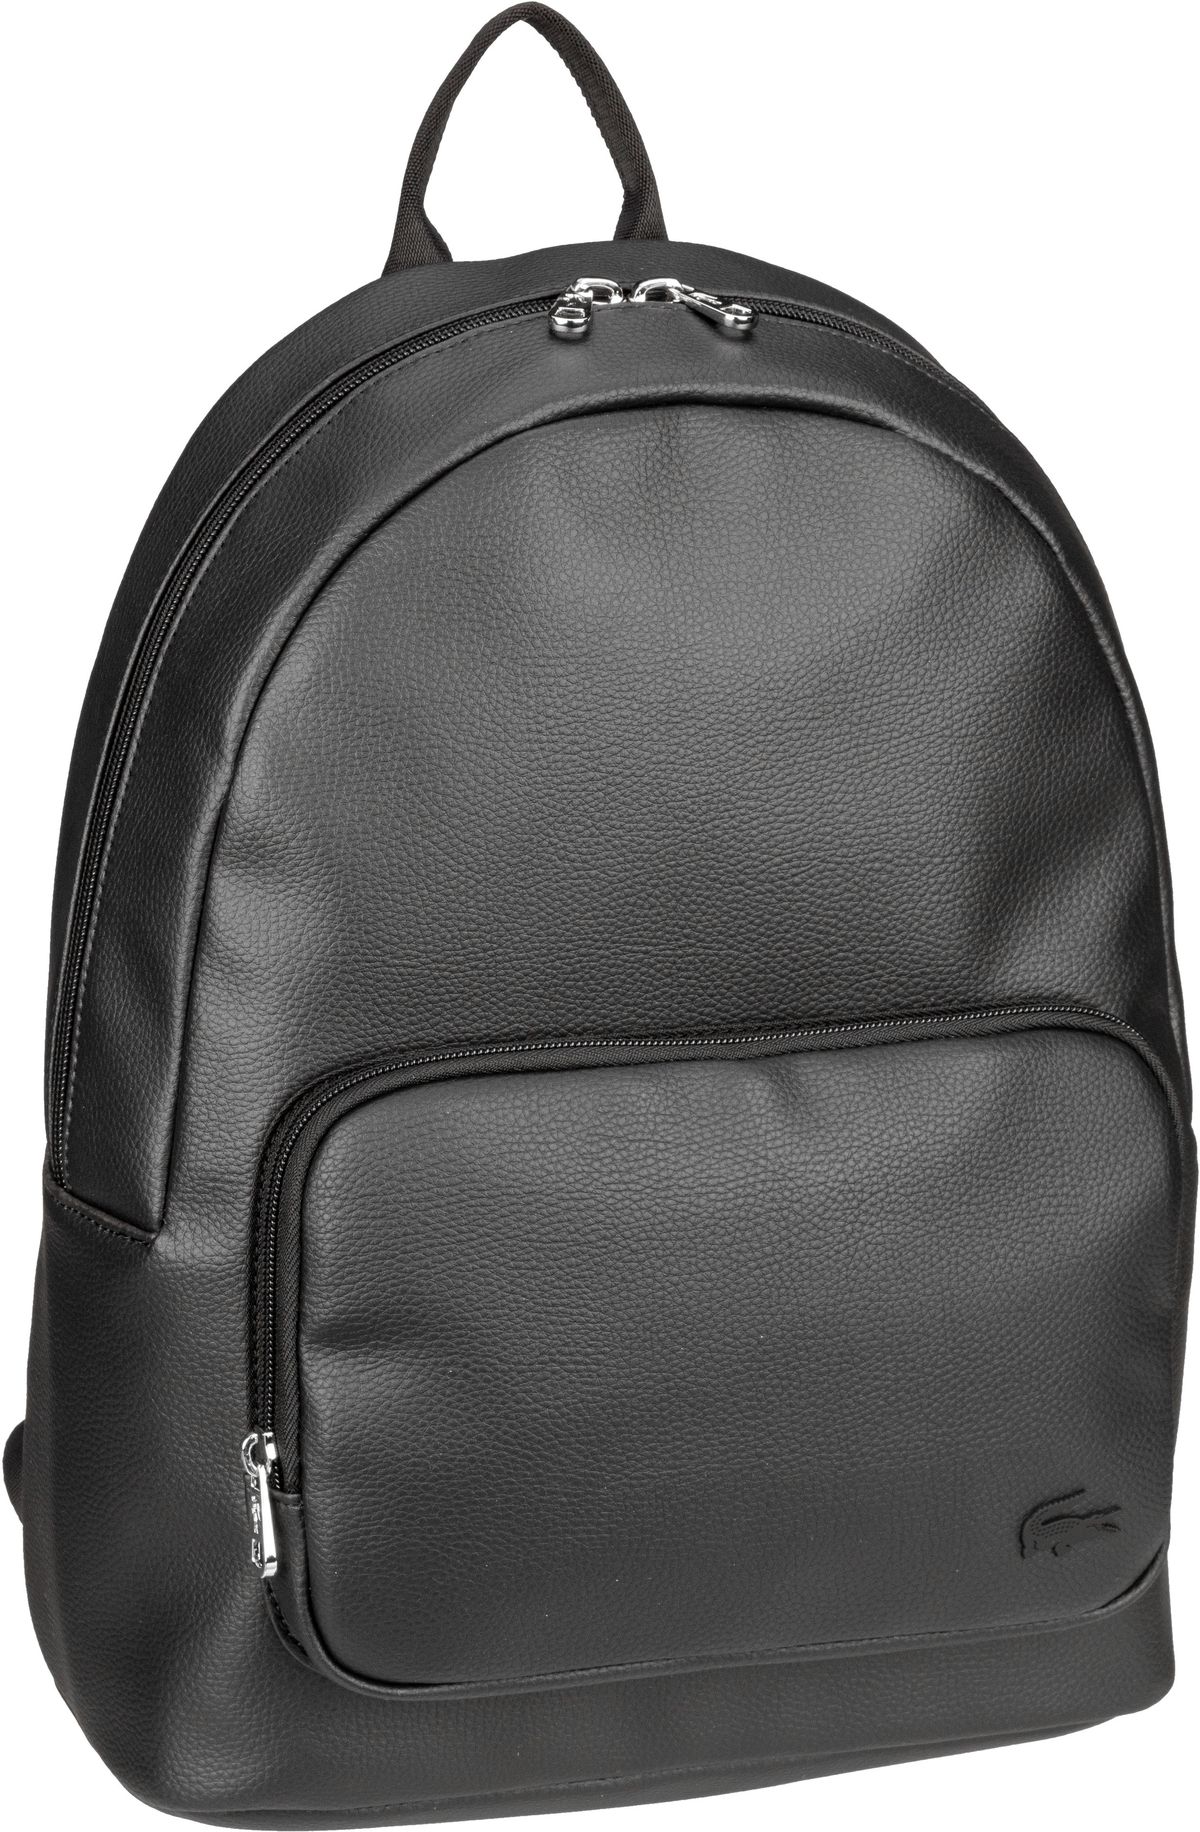 Lacoste Lacoste Rucksack / Daypack Gael Backpack 4314 Black (21.6 Liter)